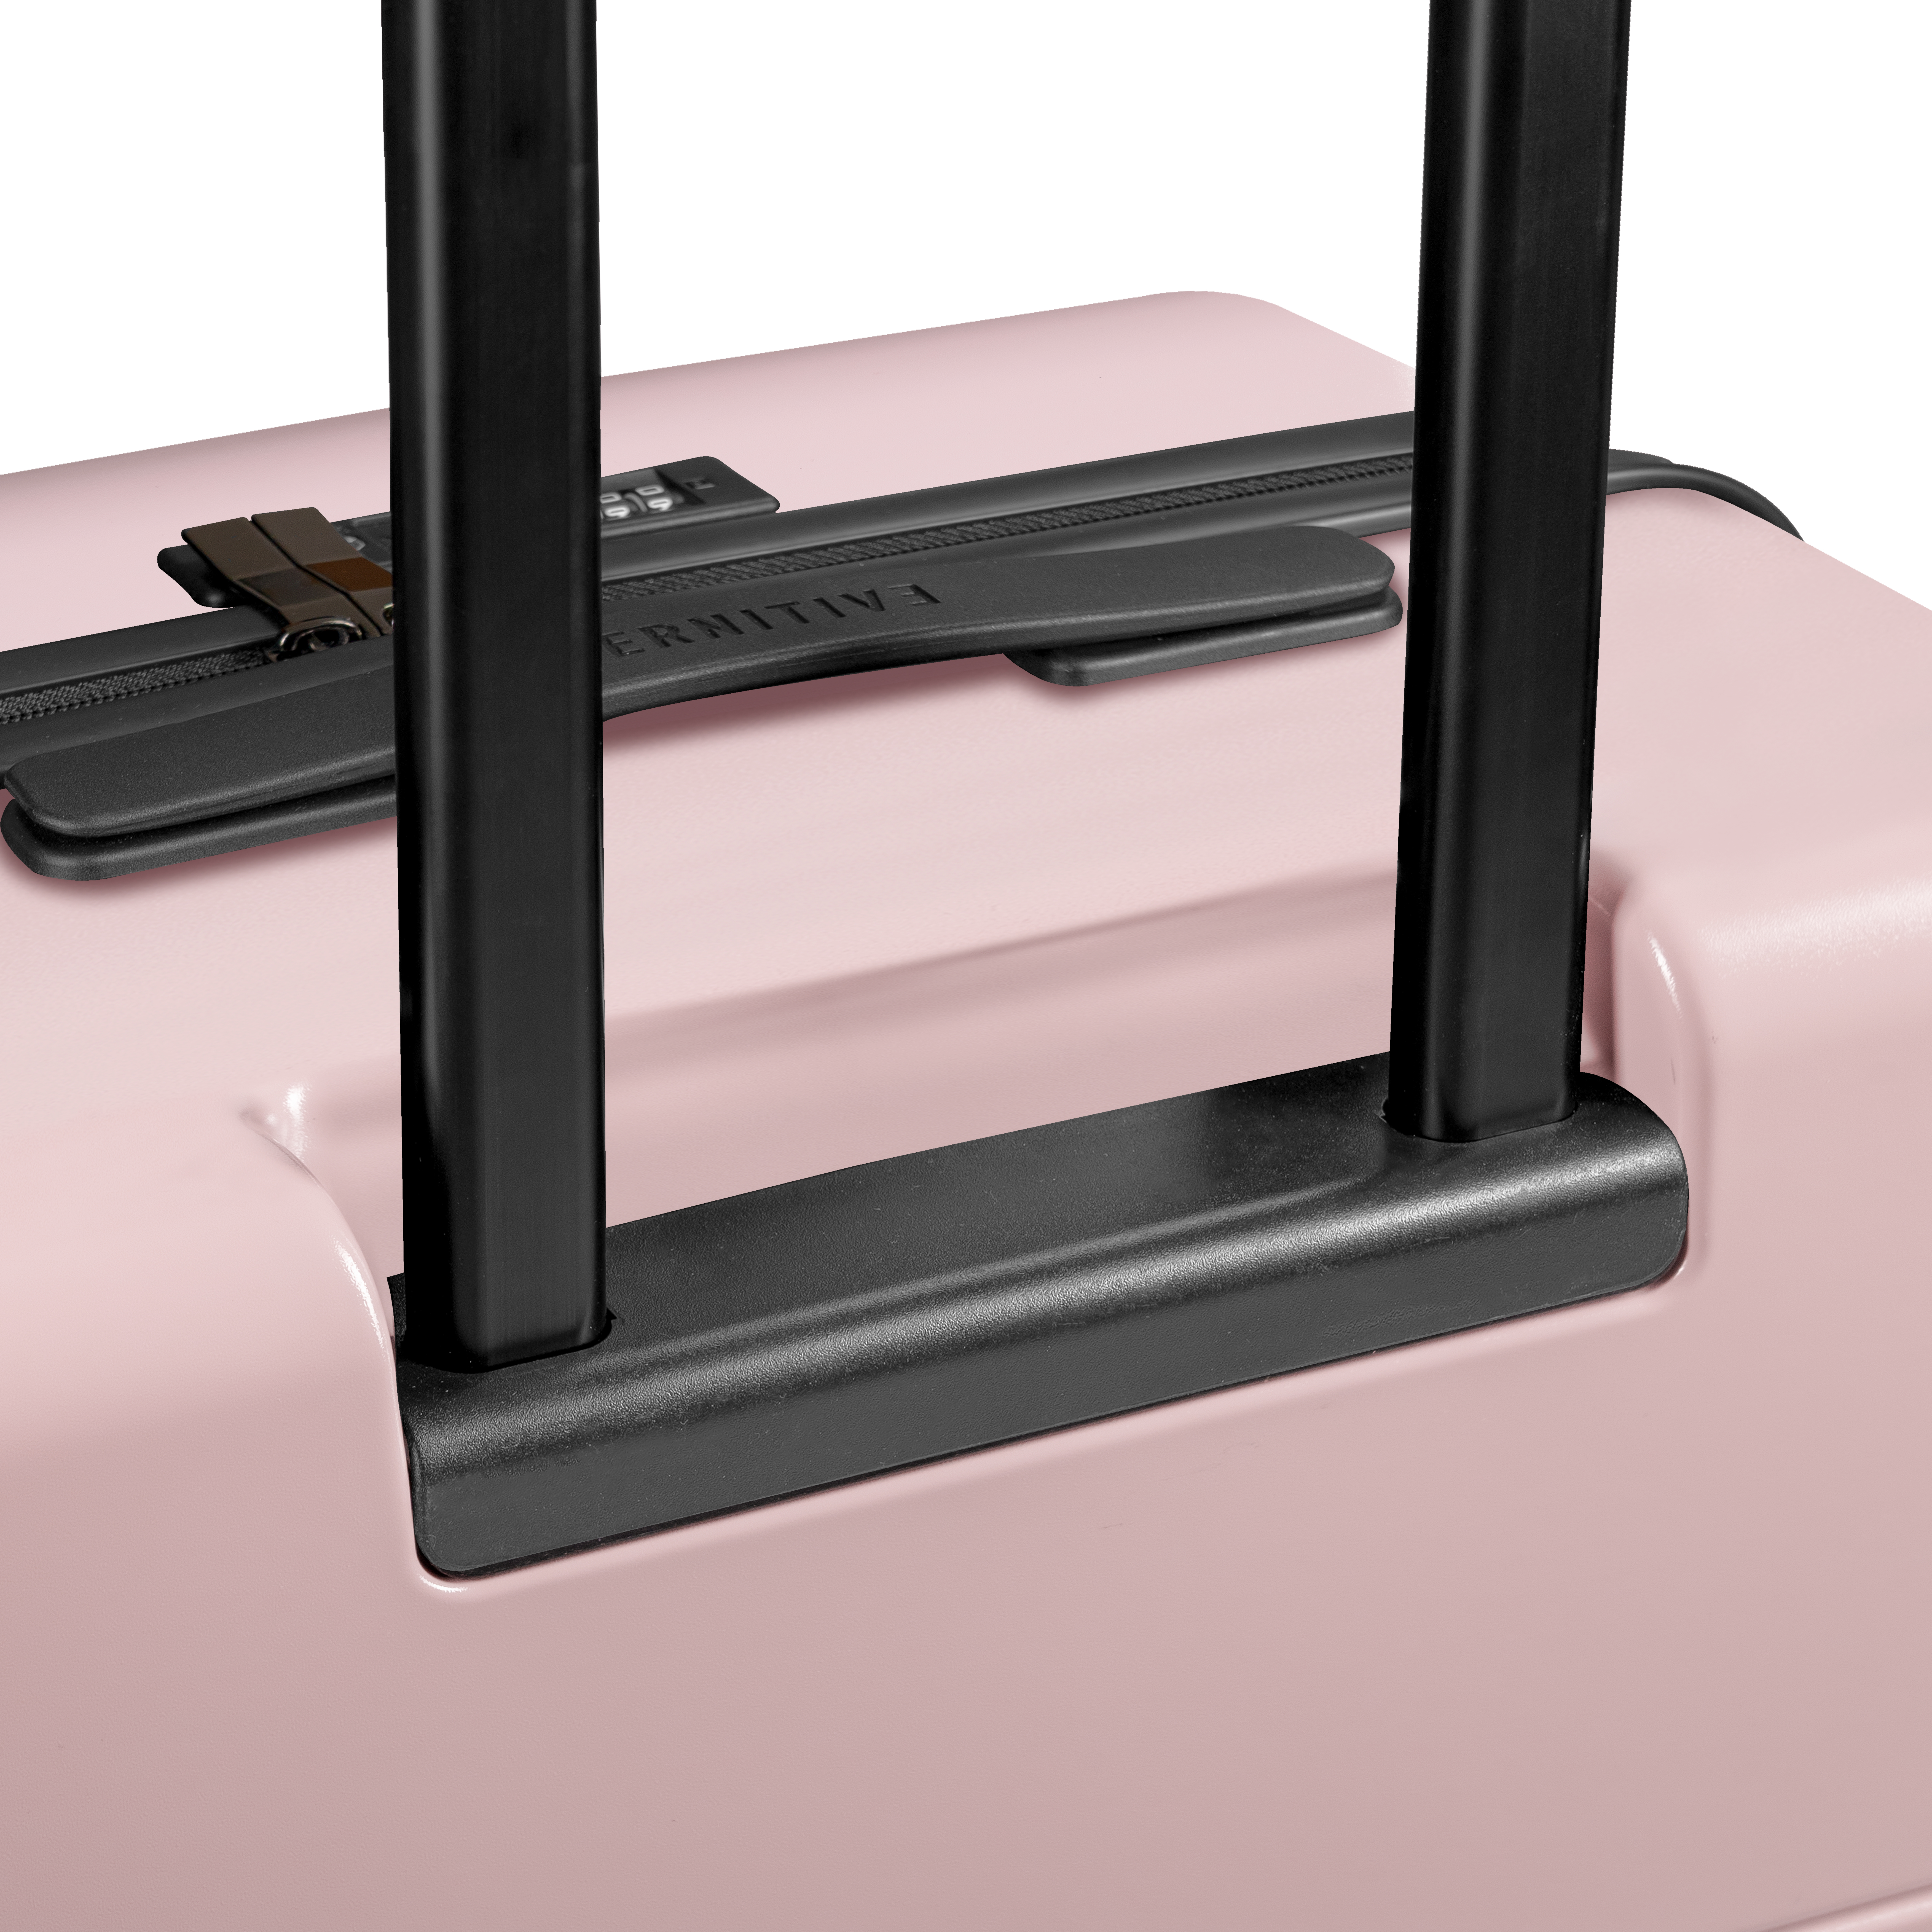 E3 Mittelgroßer Koffer pink